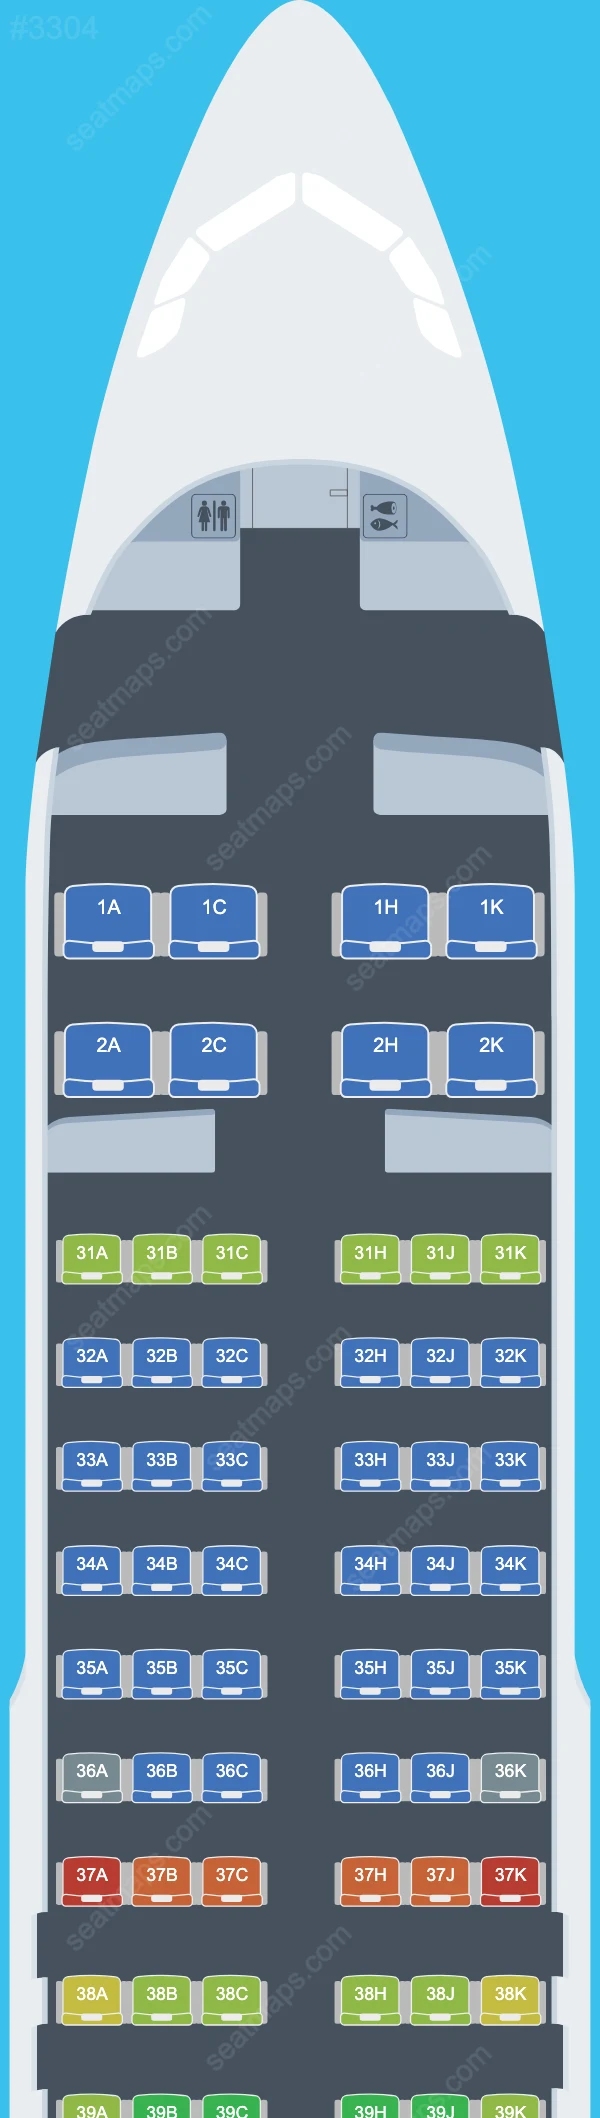 Juneyao Air Airbus A320 Seat Maps A320-200